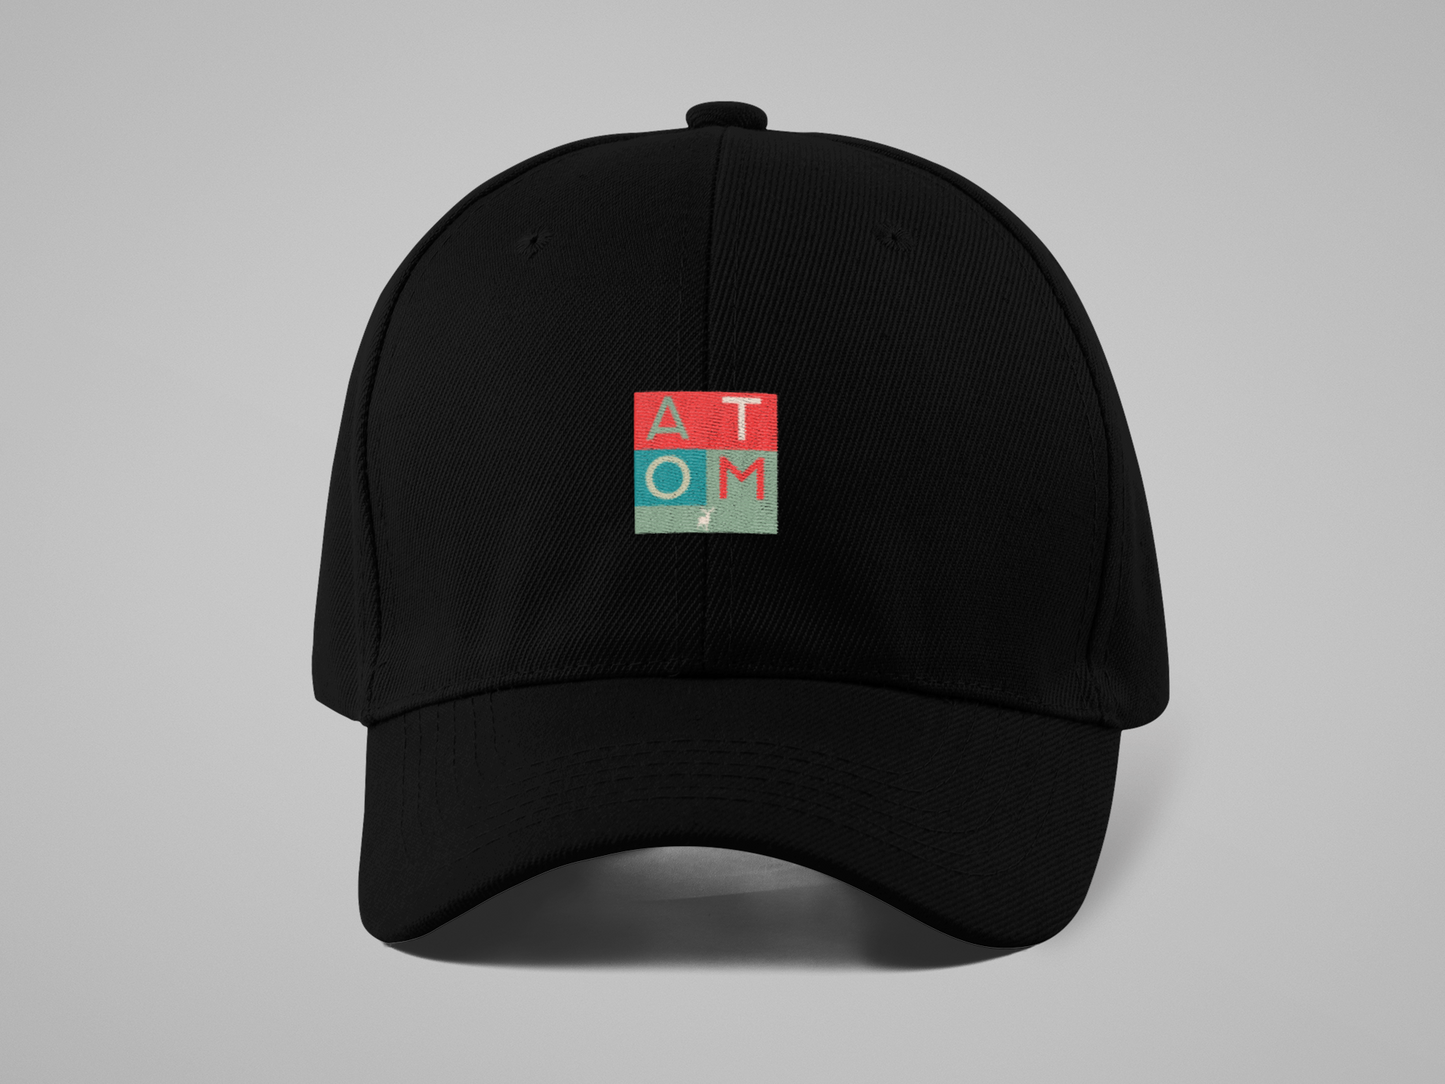 ATOM Block Design Embroidered Black Baseball Cap